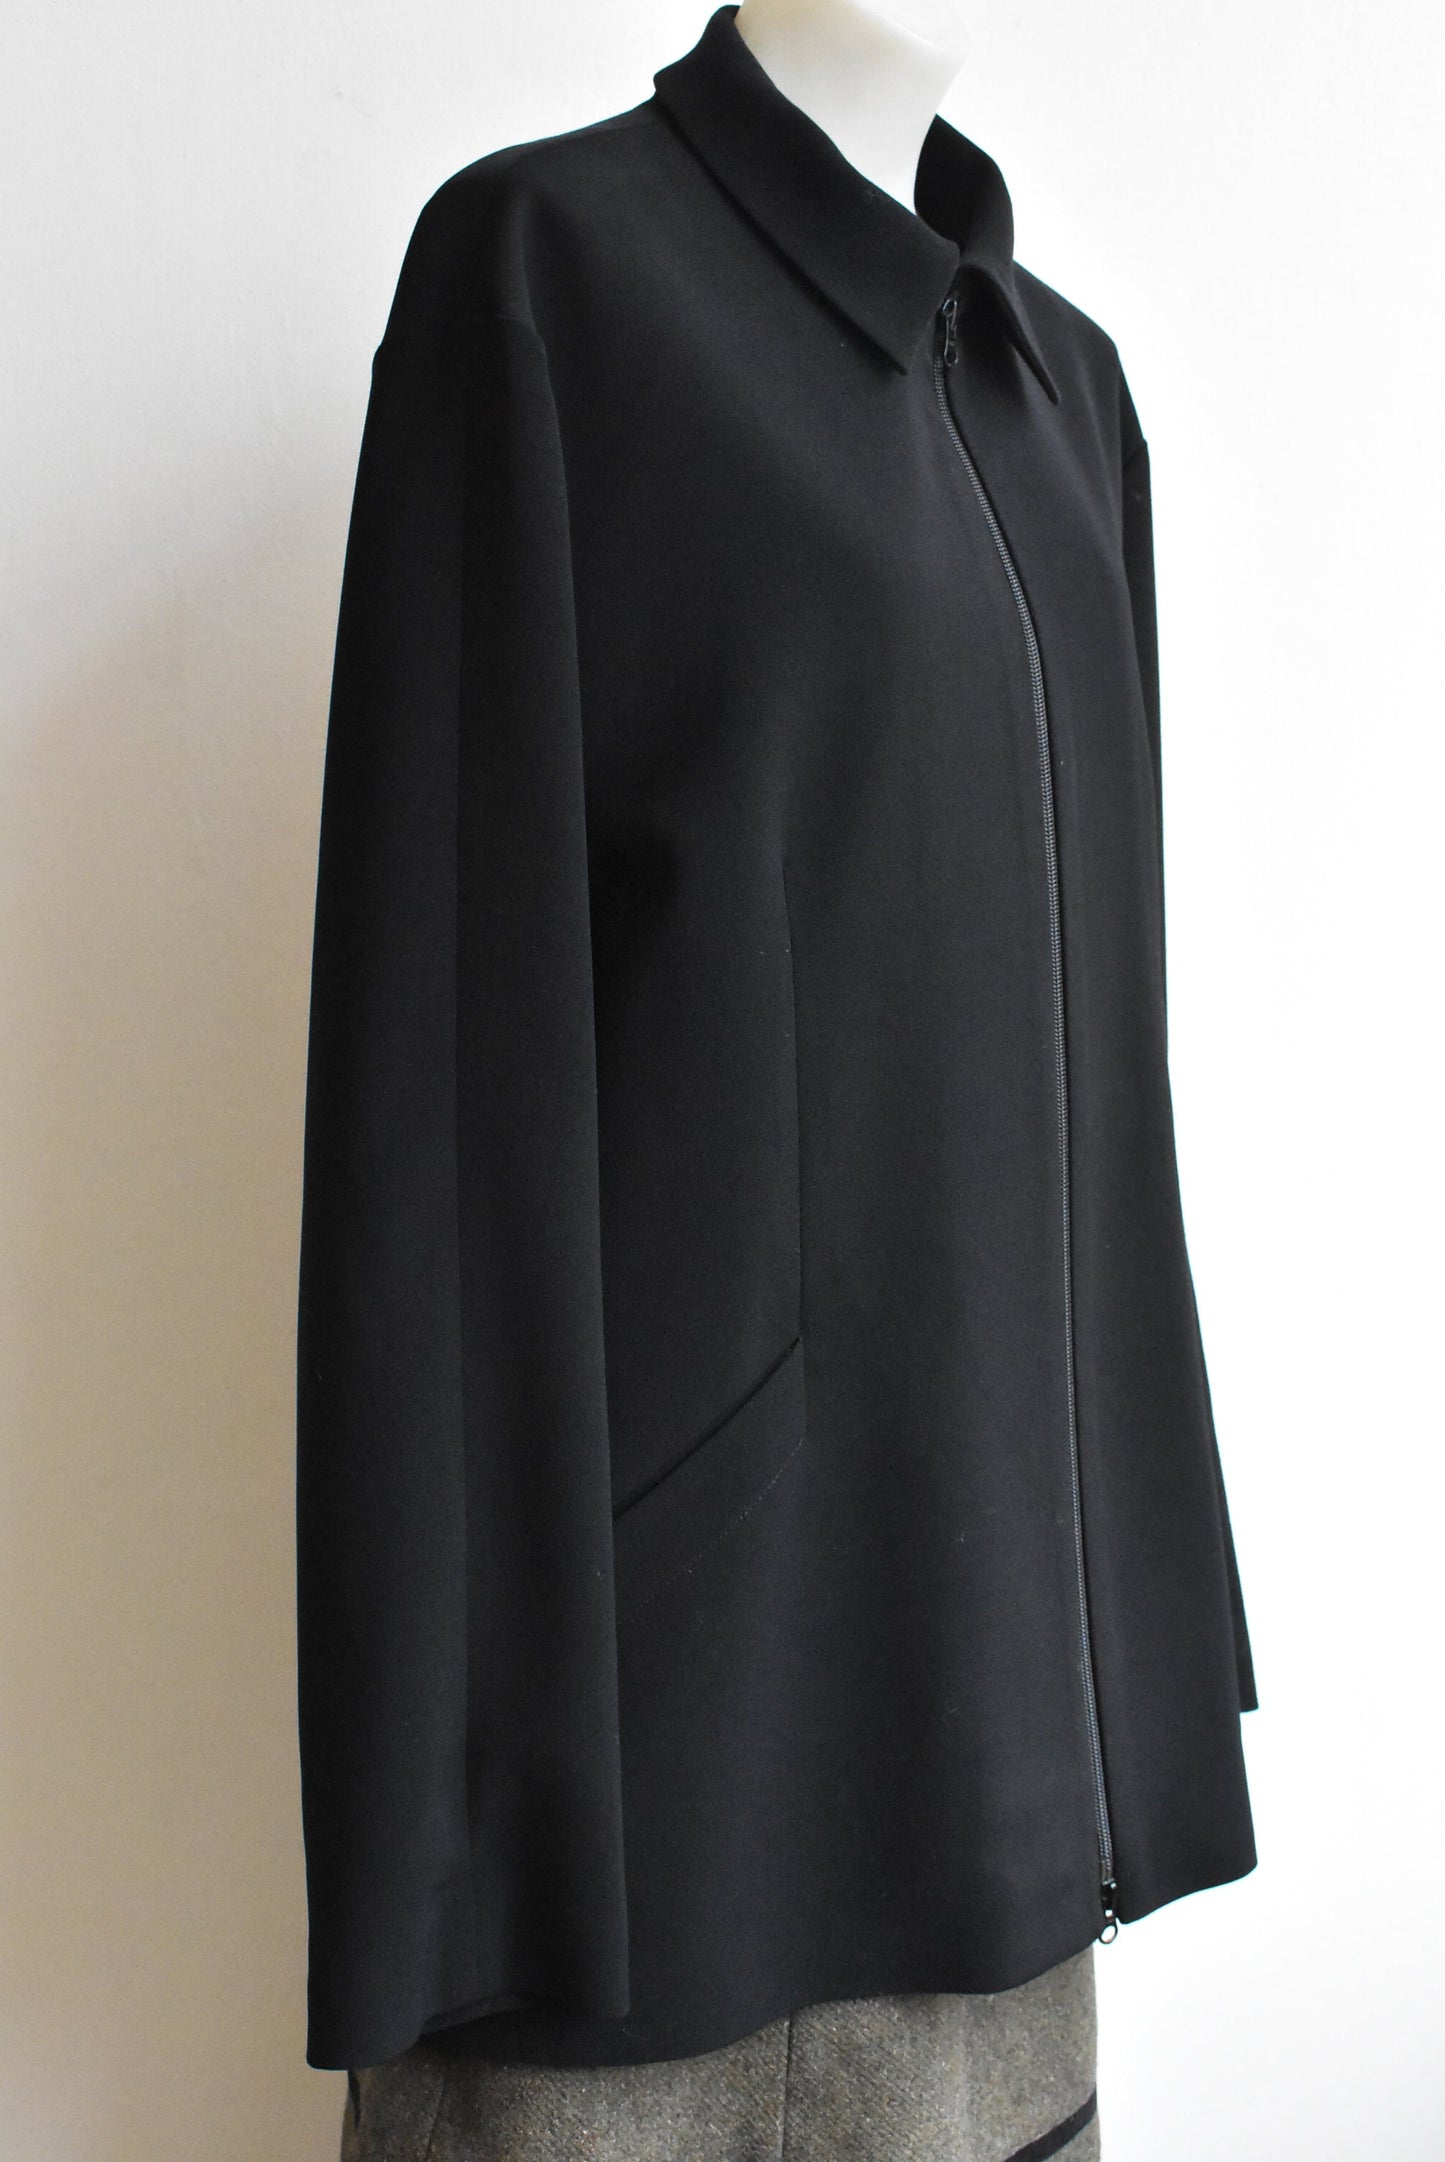 Cutler black winter jacket, XXL